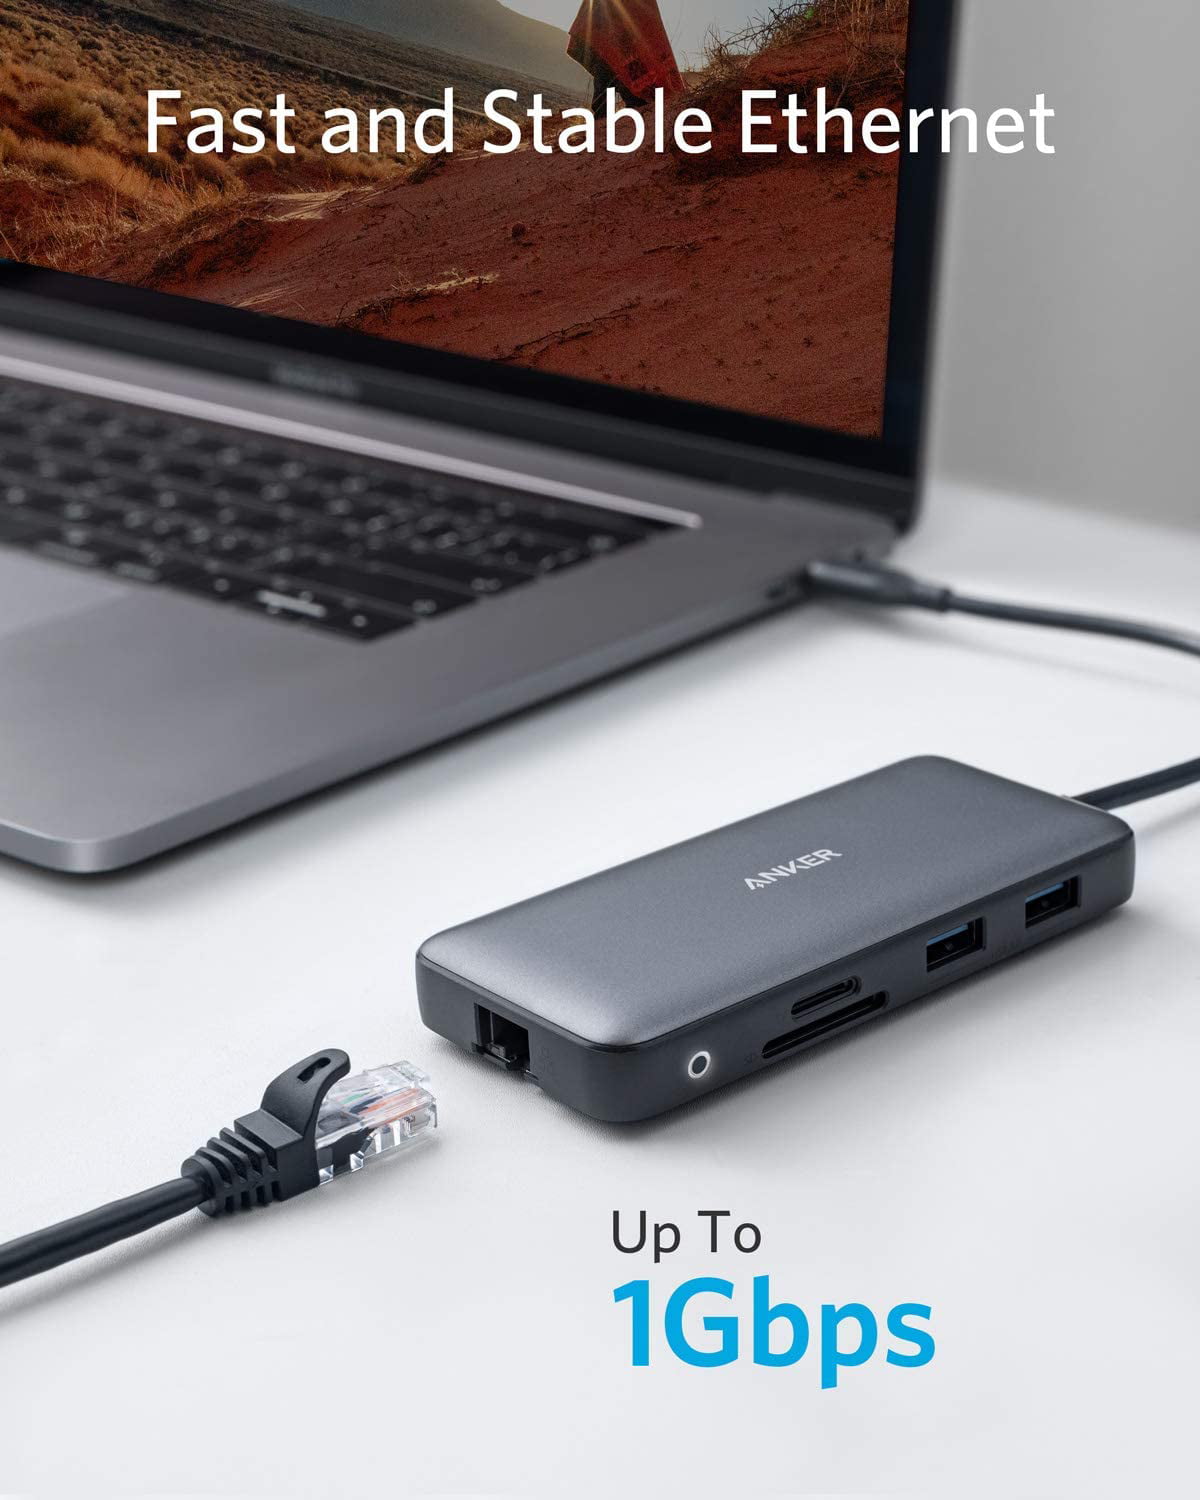 ANKER 555 USB C Hub 8 in 1 F Memory Card Reader BlackGray - Office